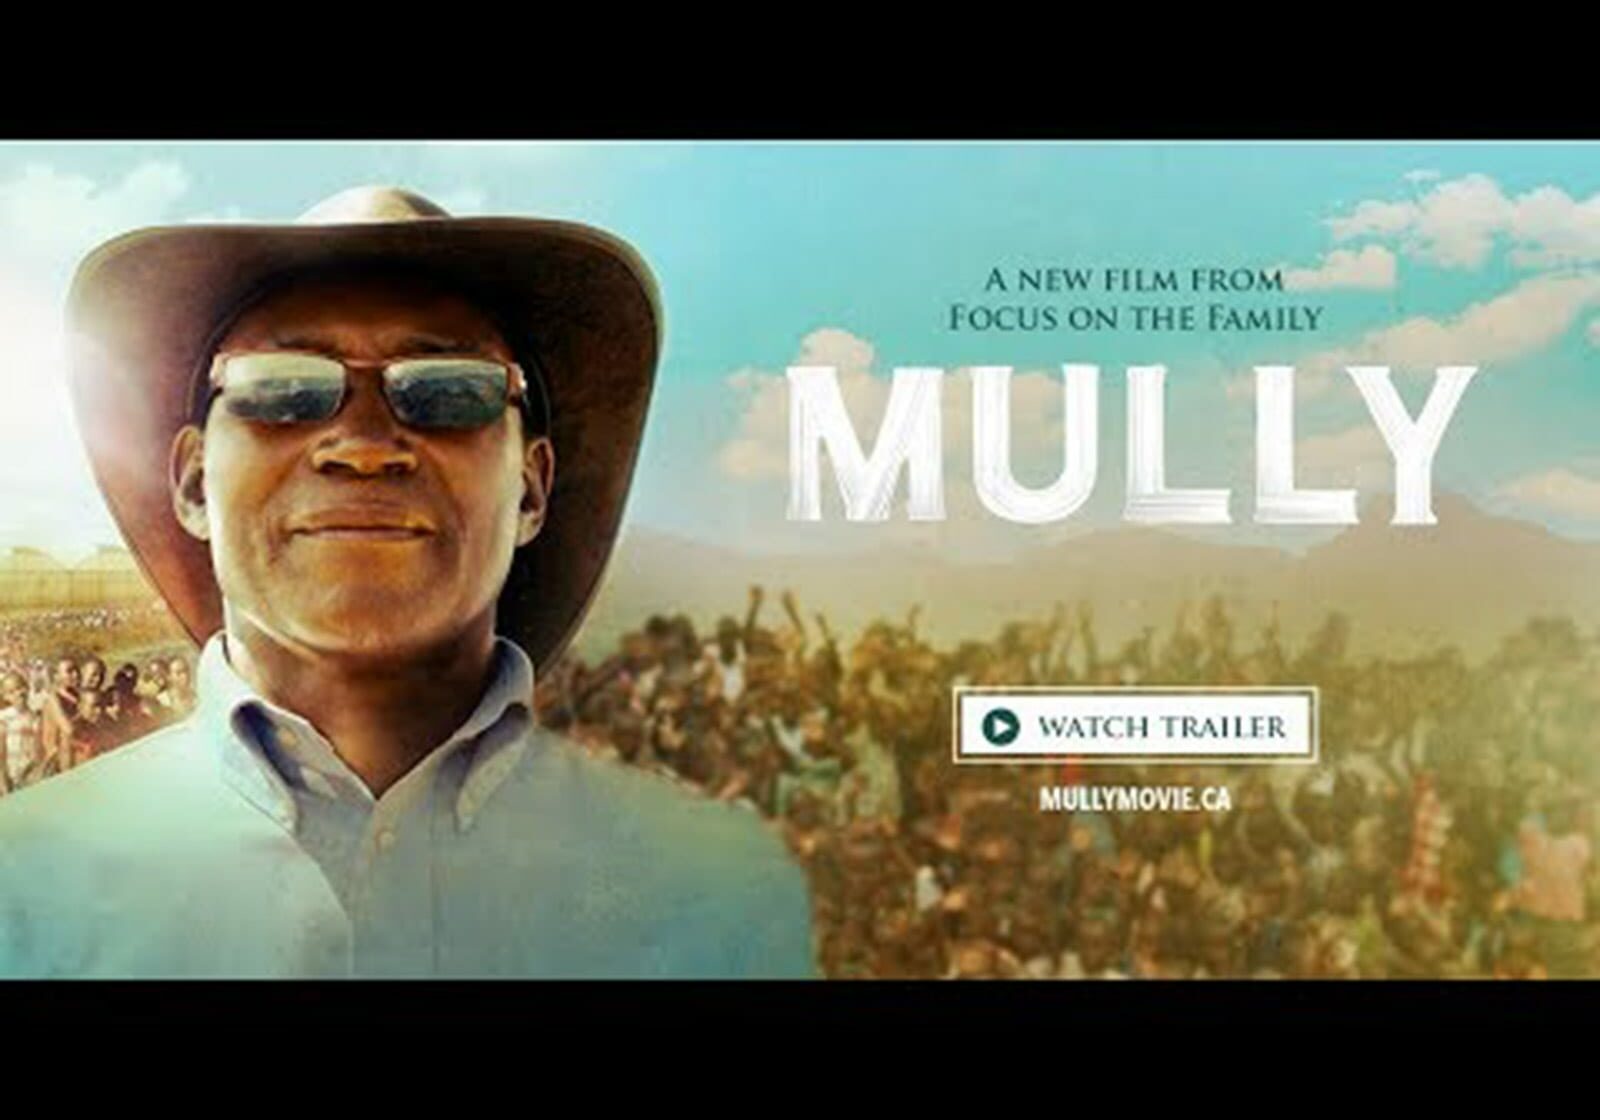 Charles Mully movie trailer